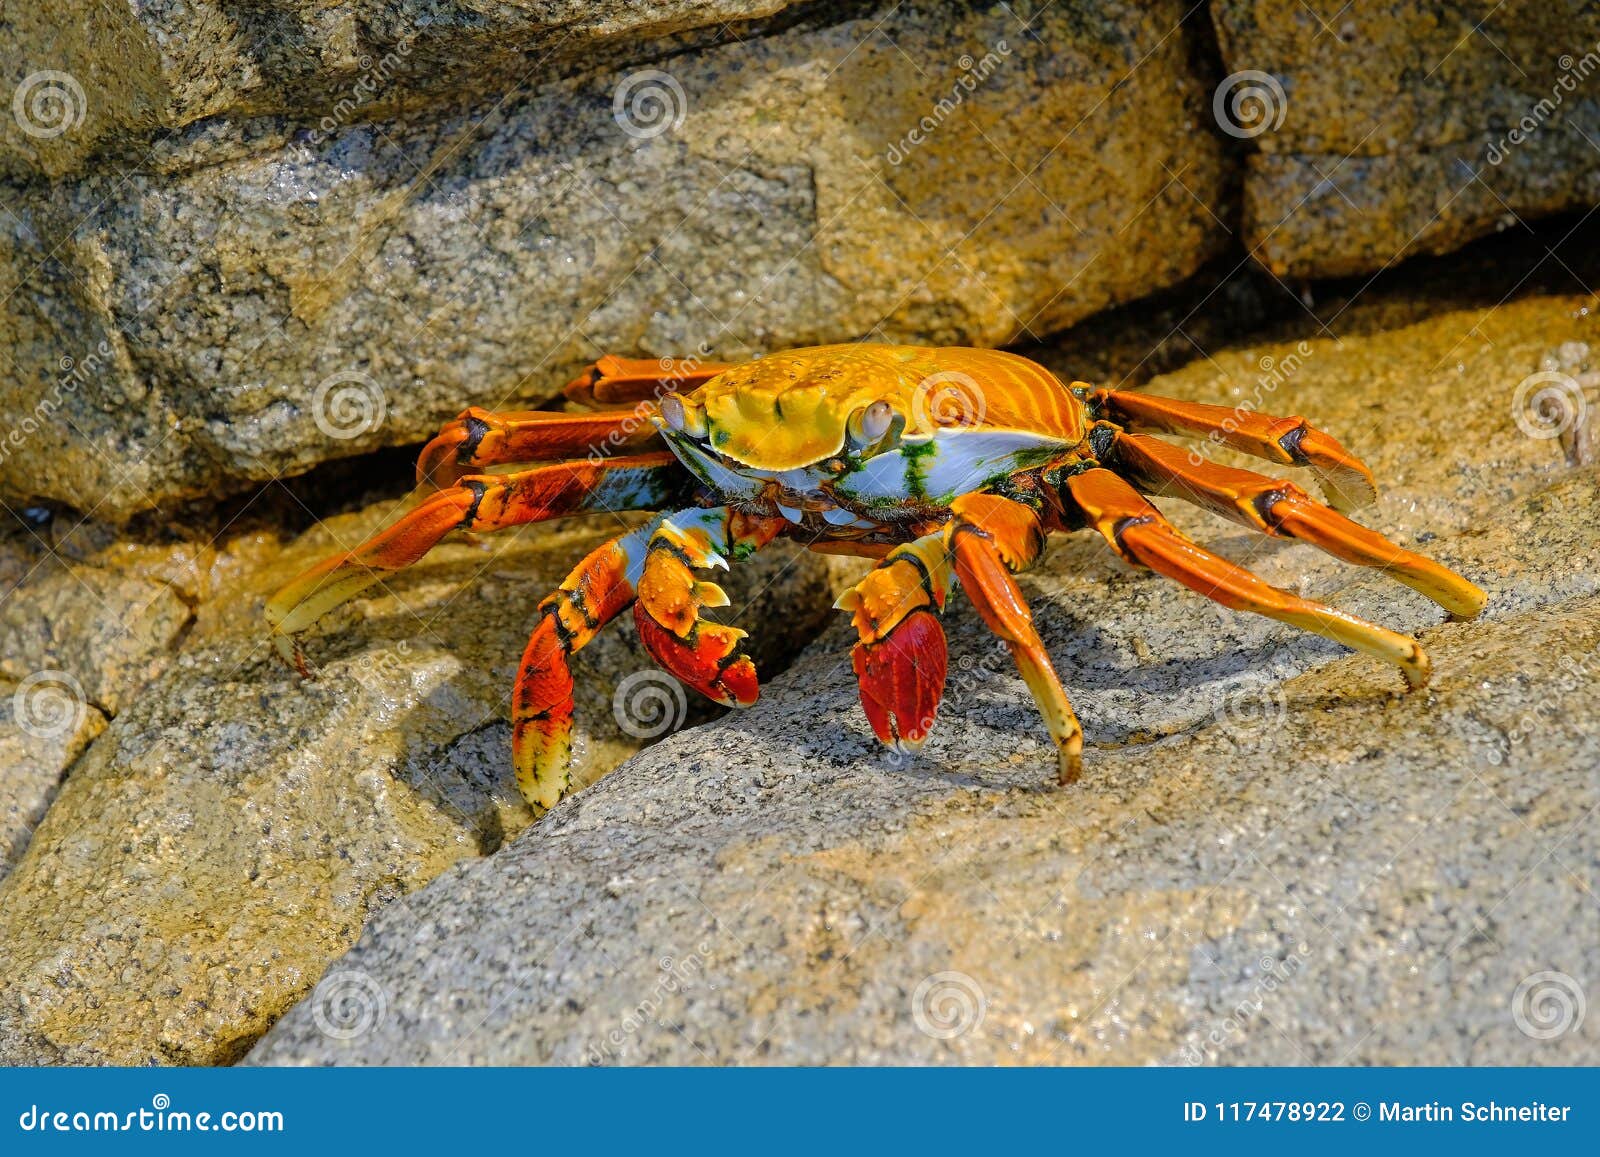 beautiful sally lightfoot crab, grapsus grapsus, on rocks, pacific ocean coast, tocopilla, chile